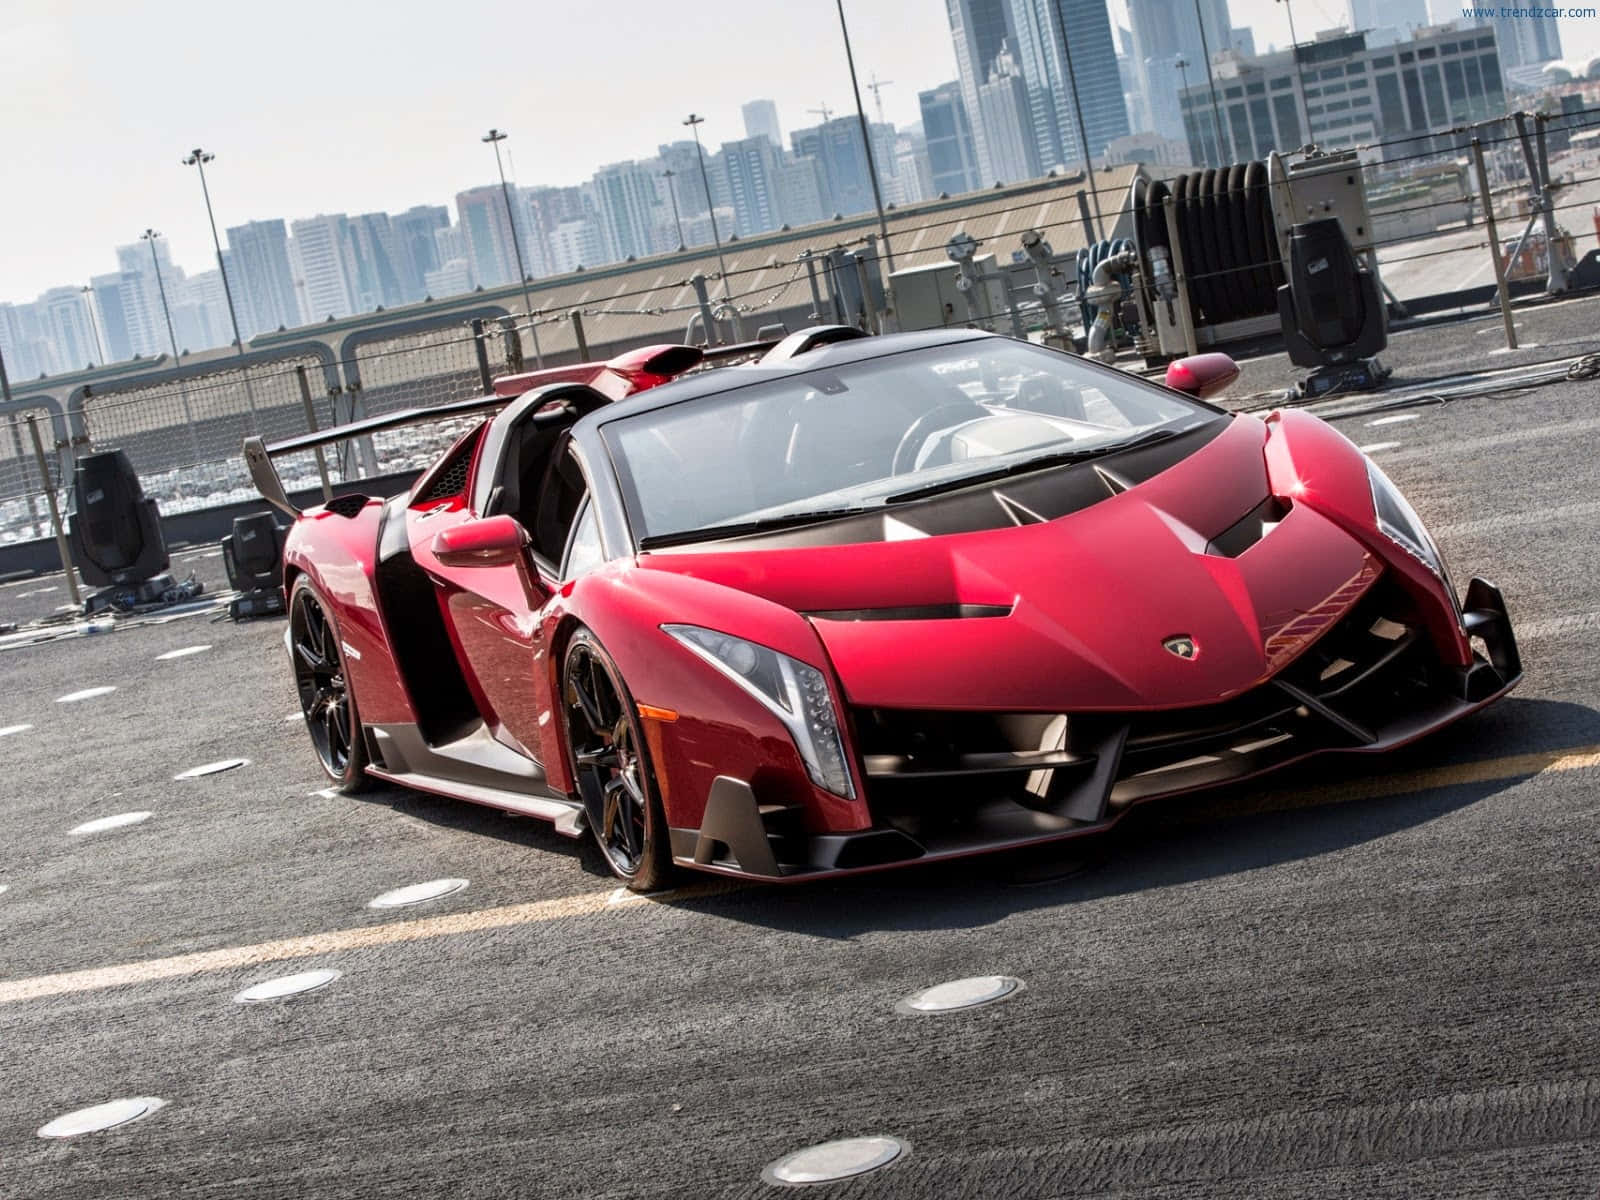 Stunning Lamborghini Veneno in motion Wallpaper